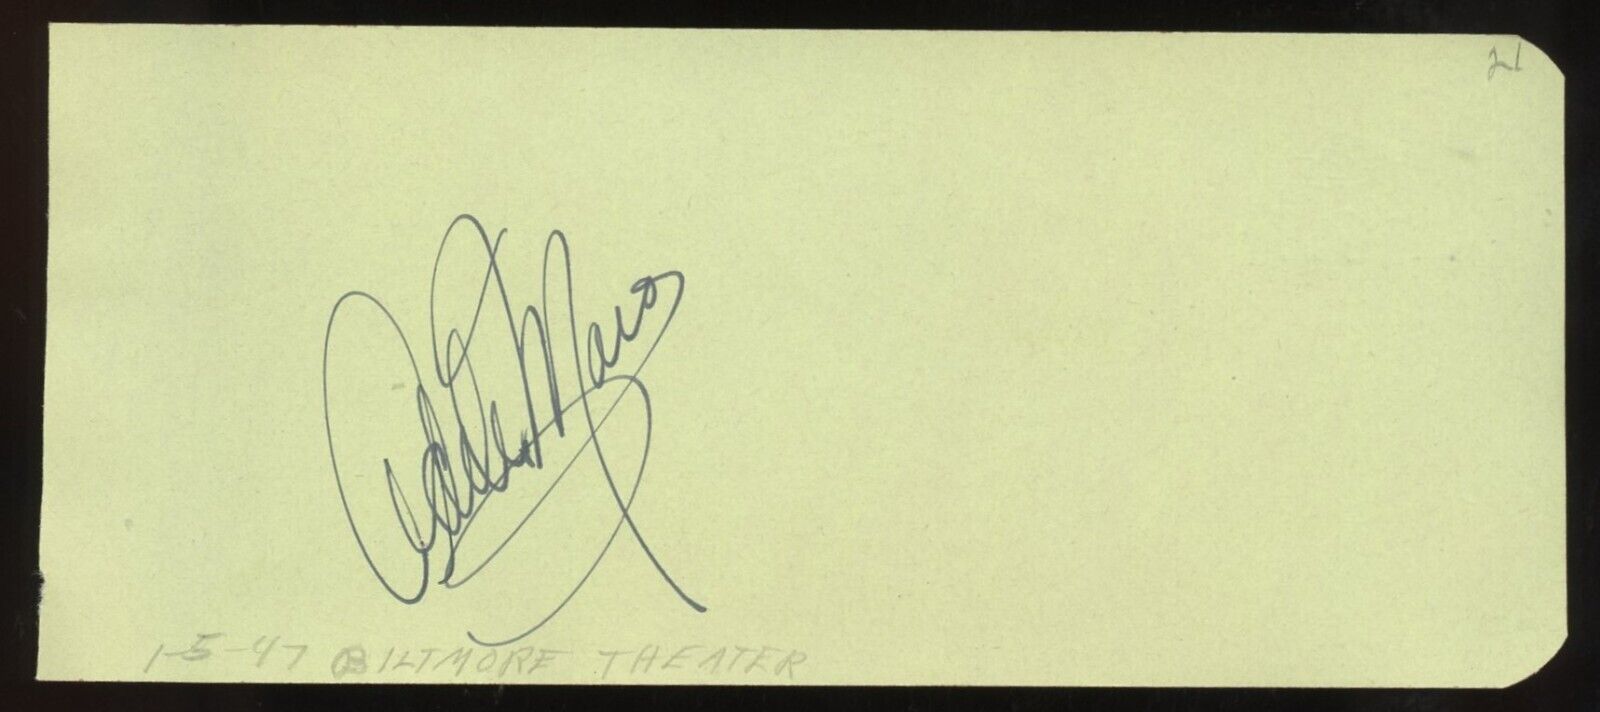 Adele Mara d2010 signed 2x5 cut autograph on 1-5-47 at Biltmore Theater LA